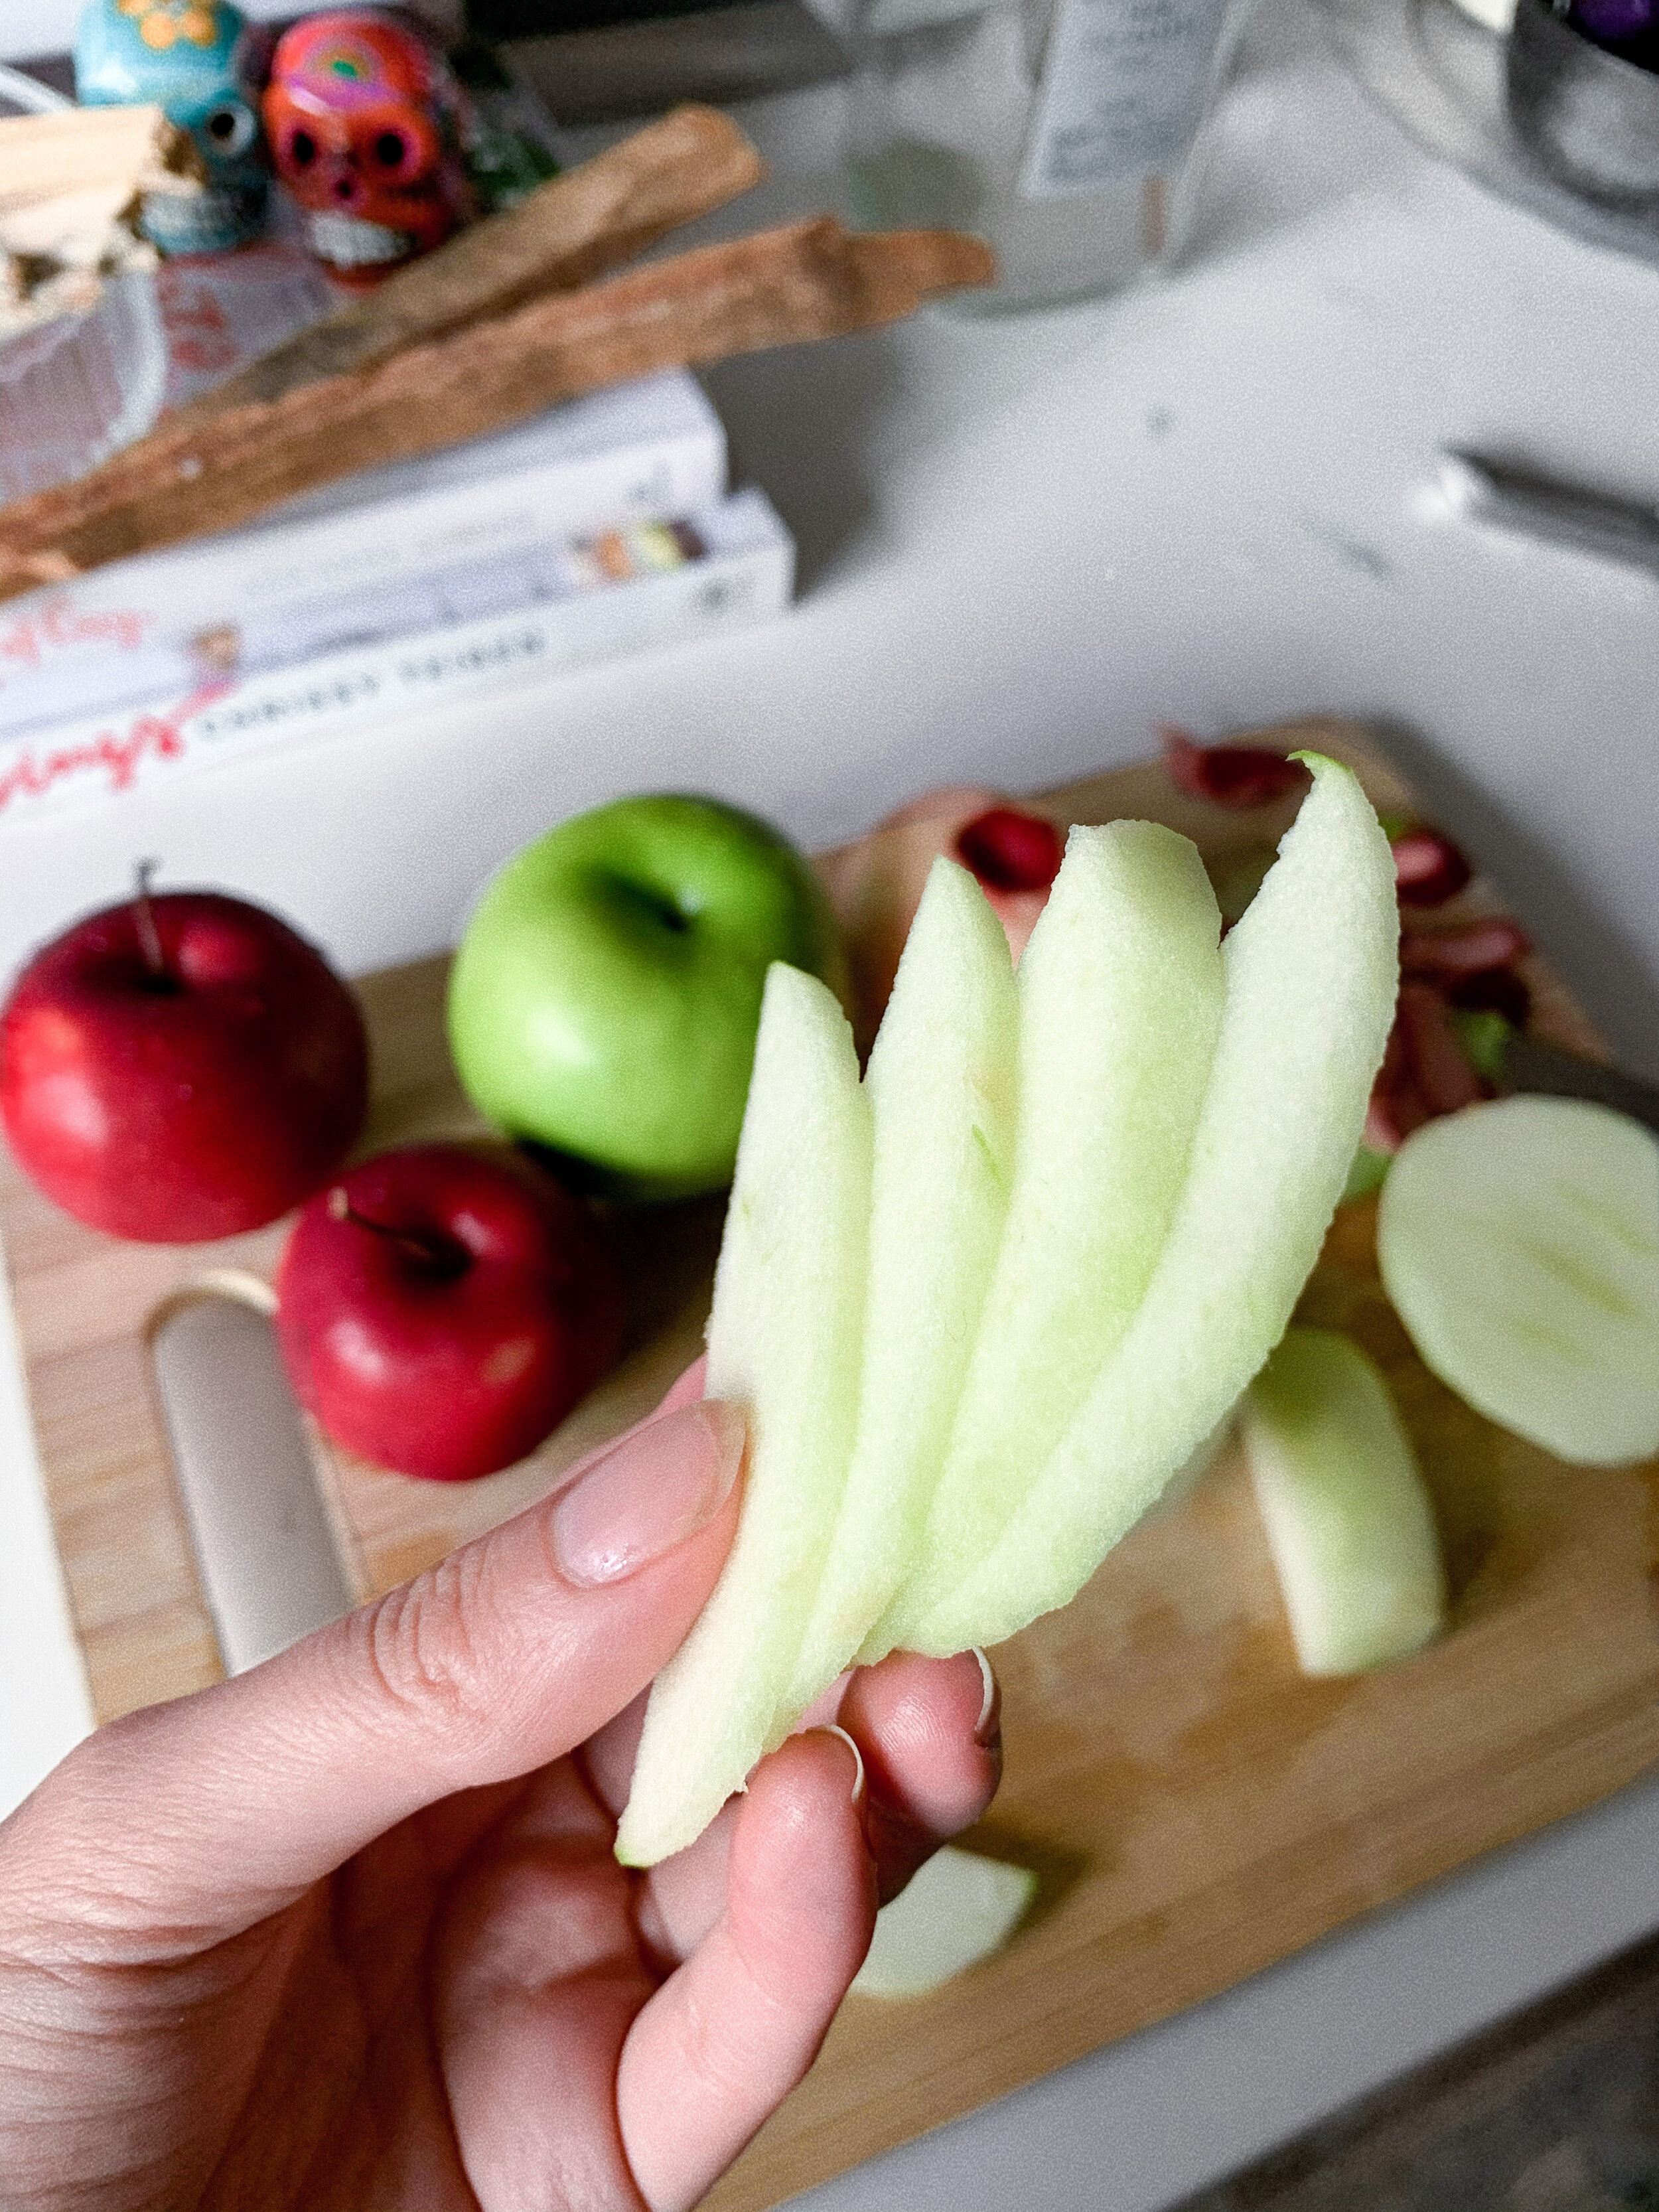 Slicing the apples for the Apple Tarte Tatin